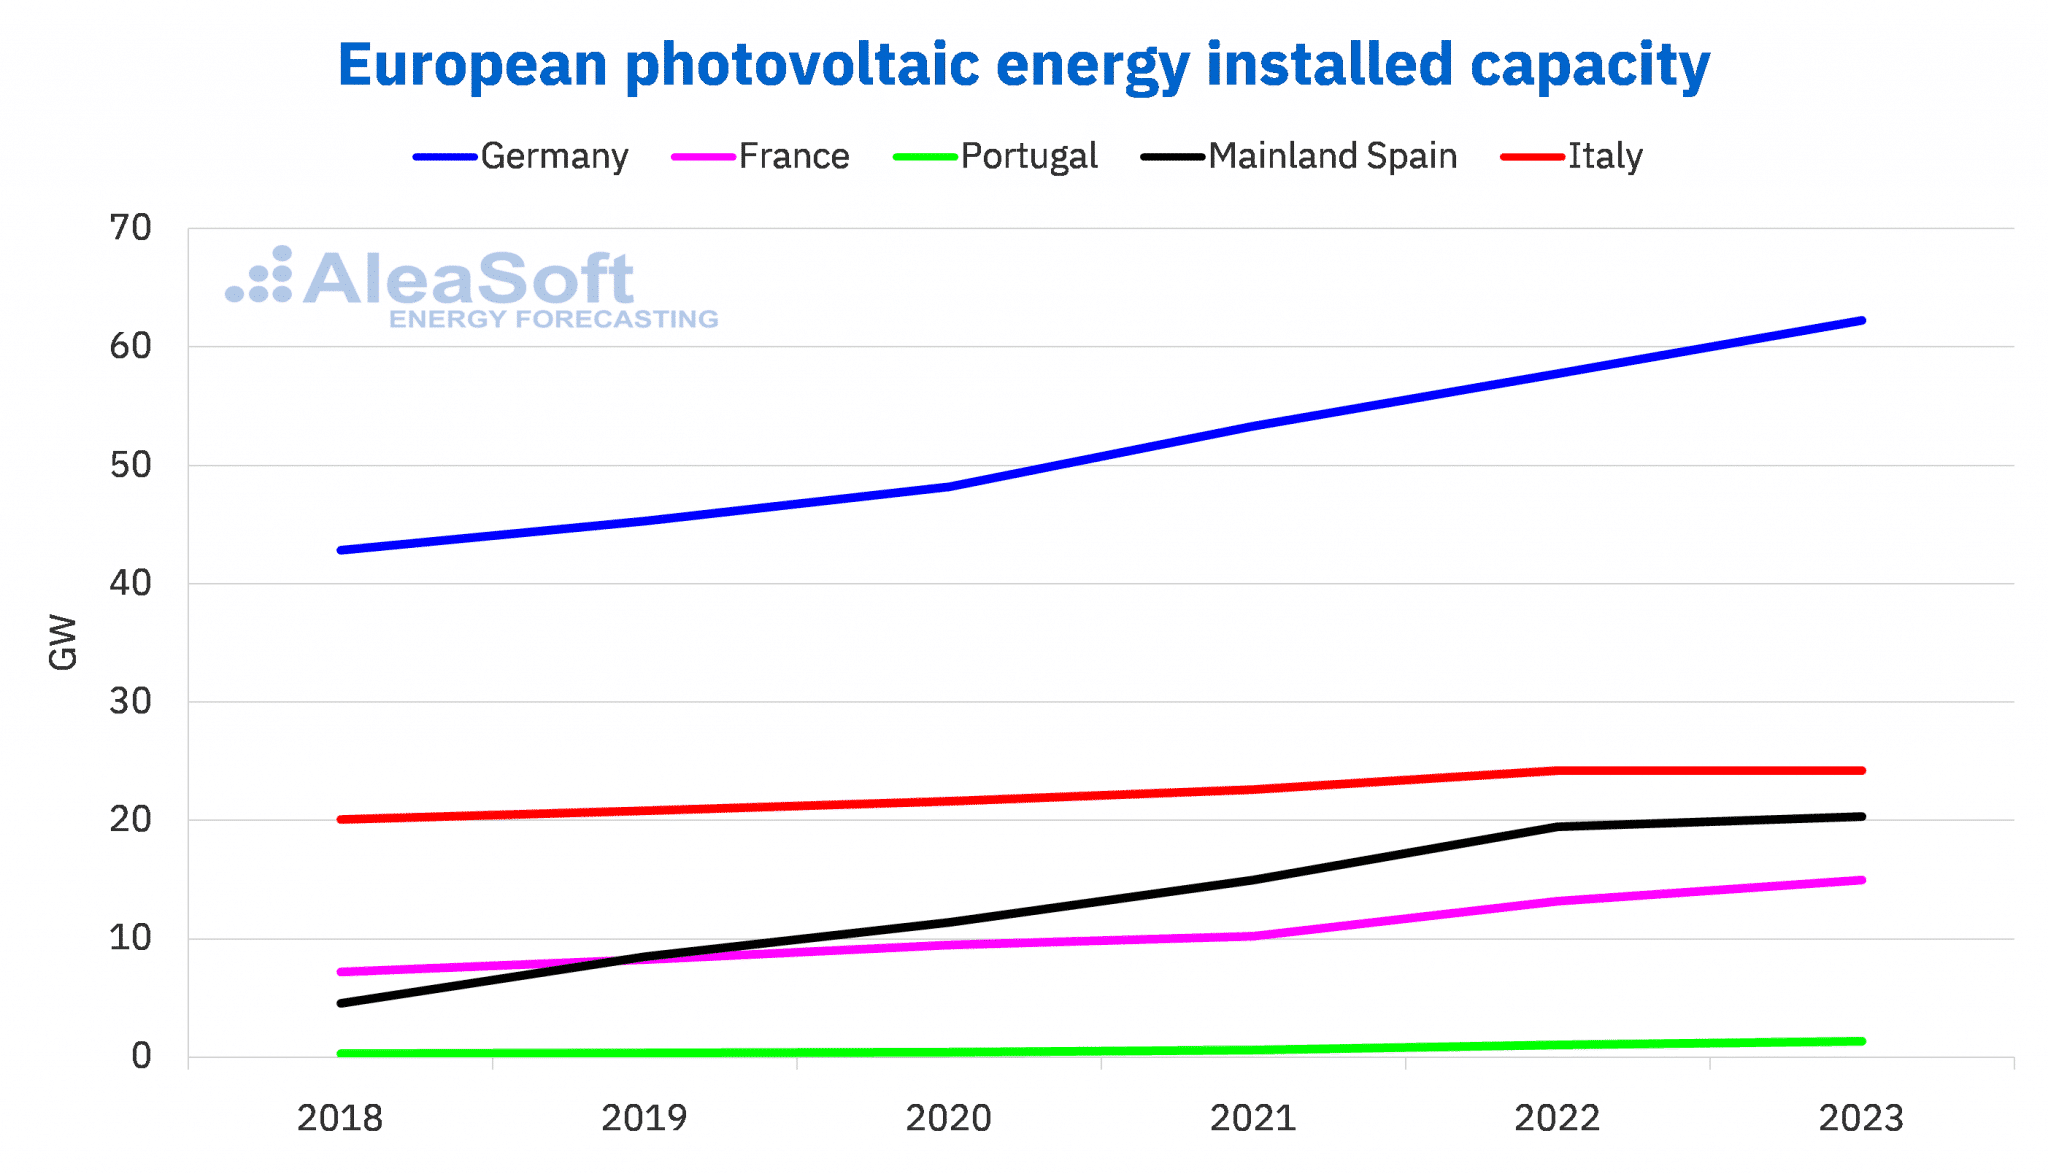 AleaSoft - european photovoltaic energy installed capacity